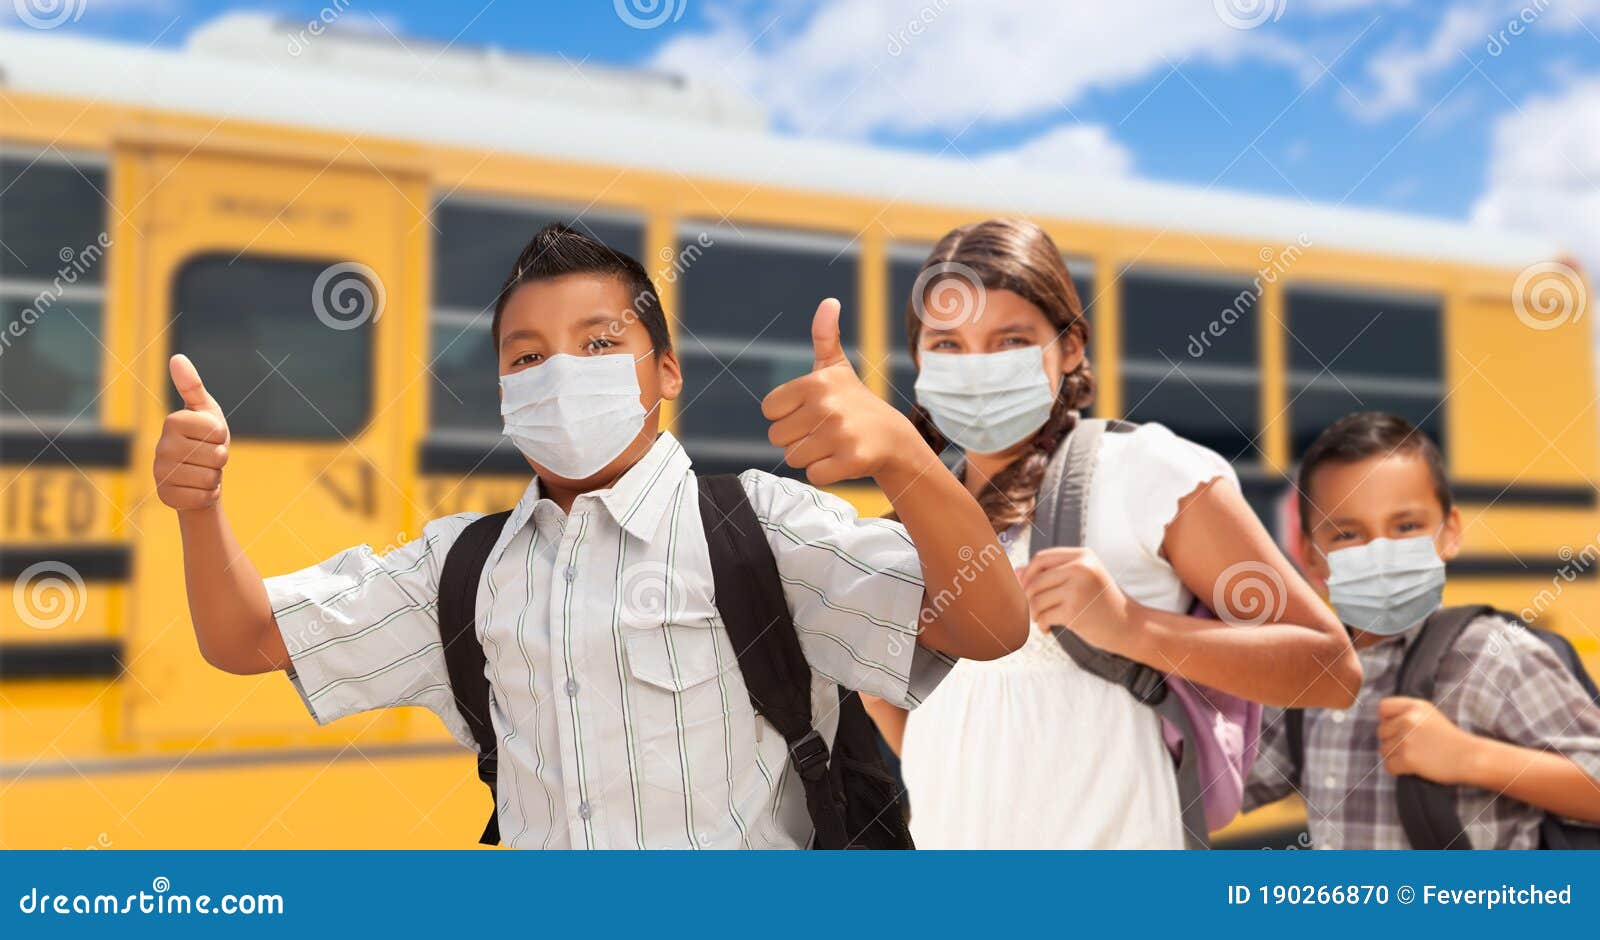 three hispanic students near school bus wearing face masks